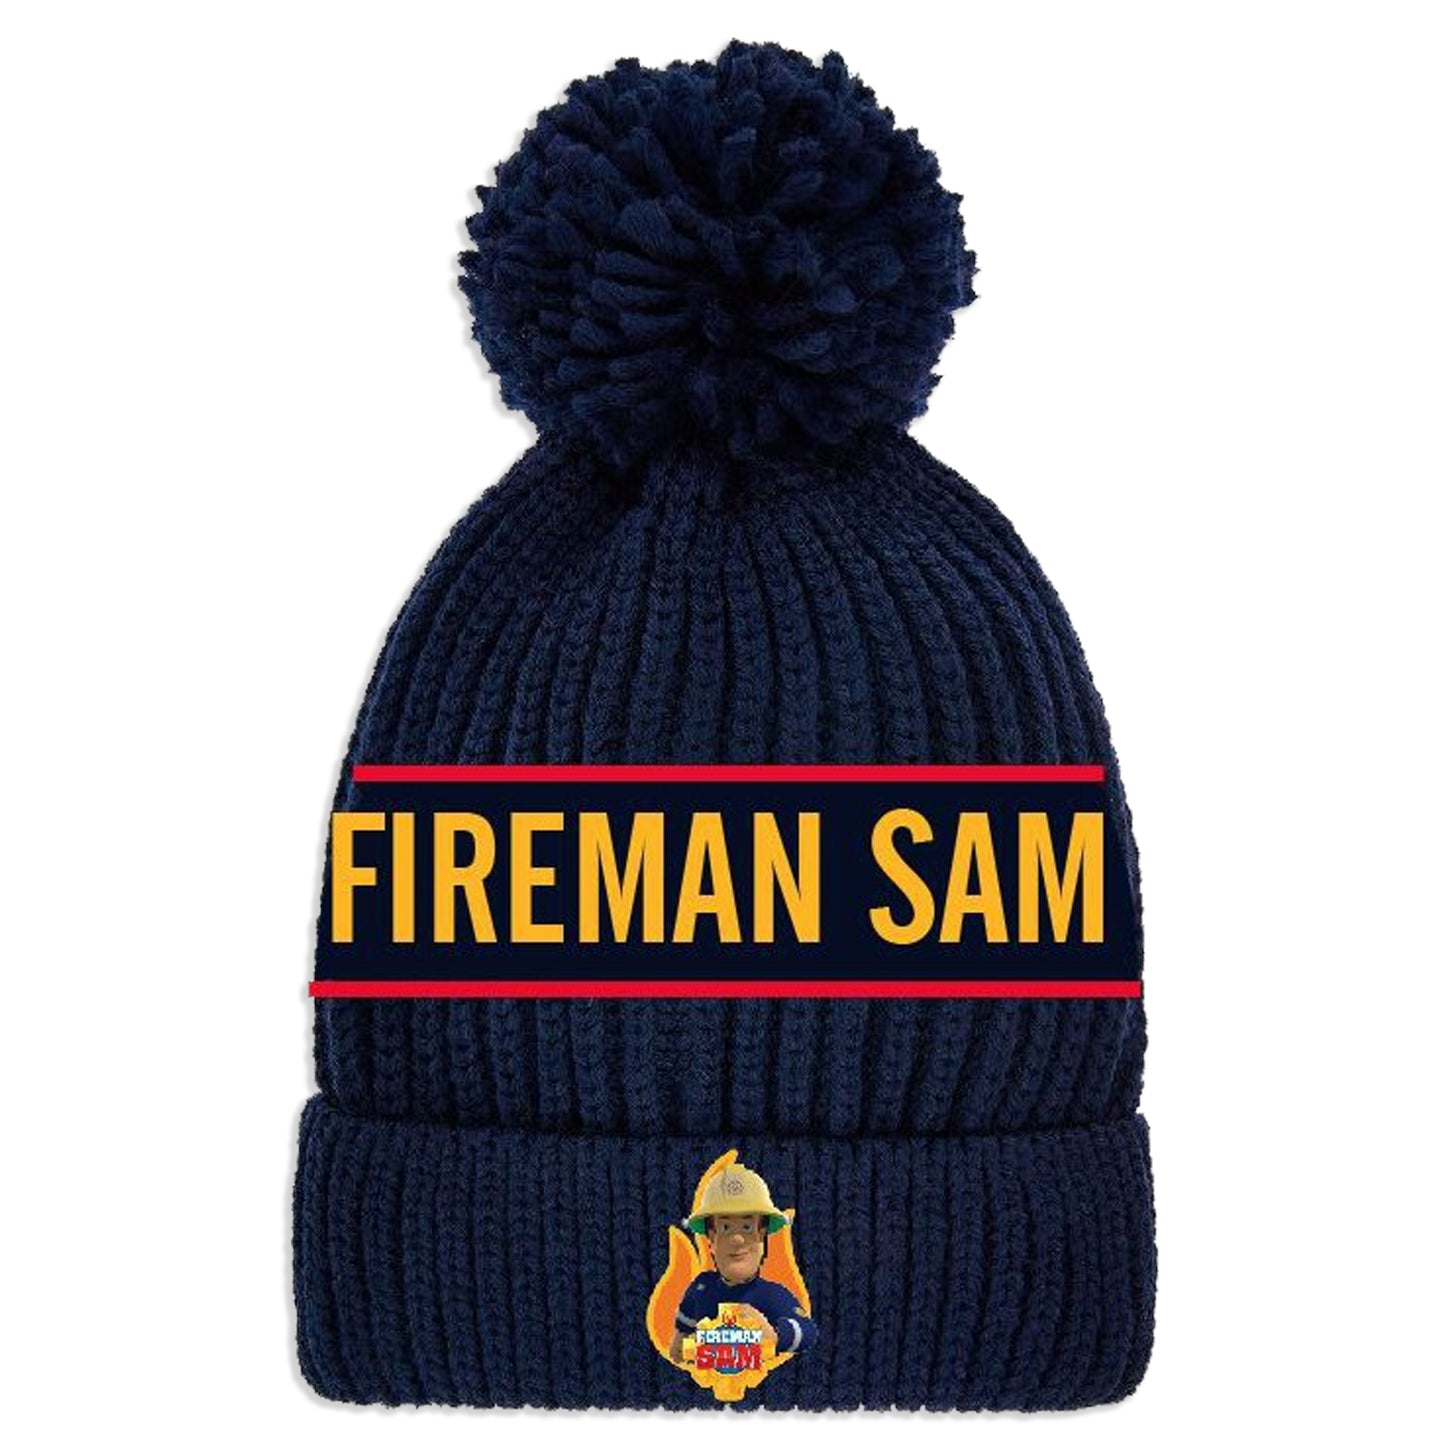 Fireman Sam Acrylic Winter Beanie for Kids